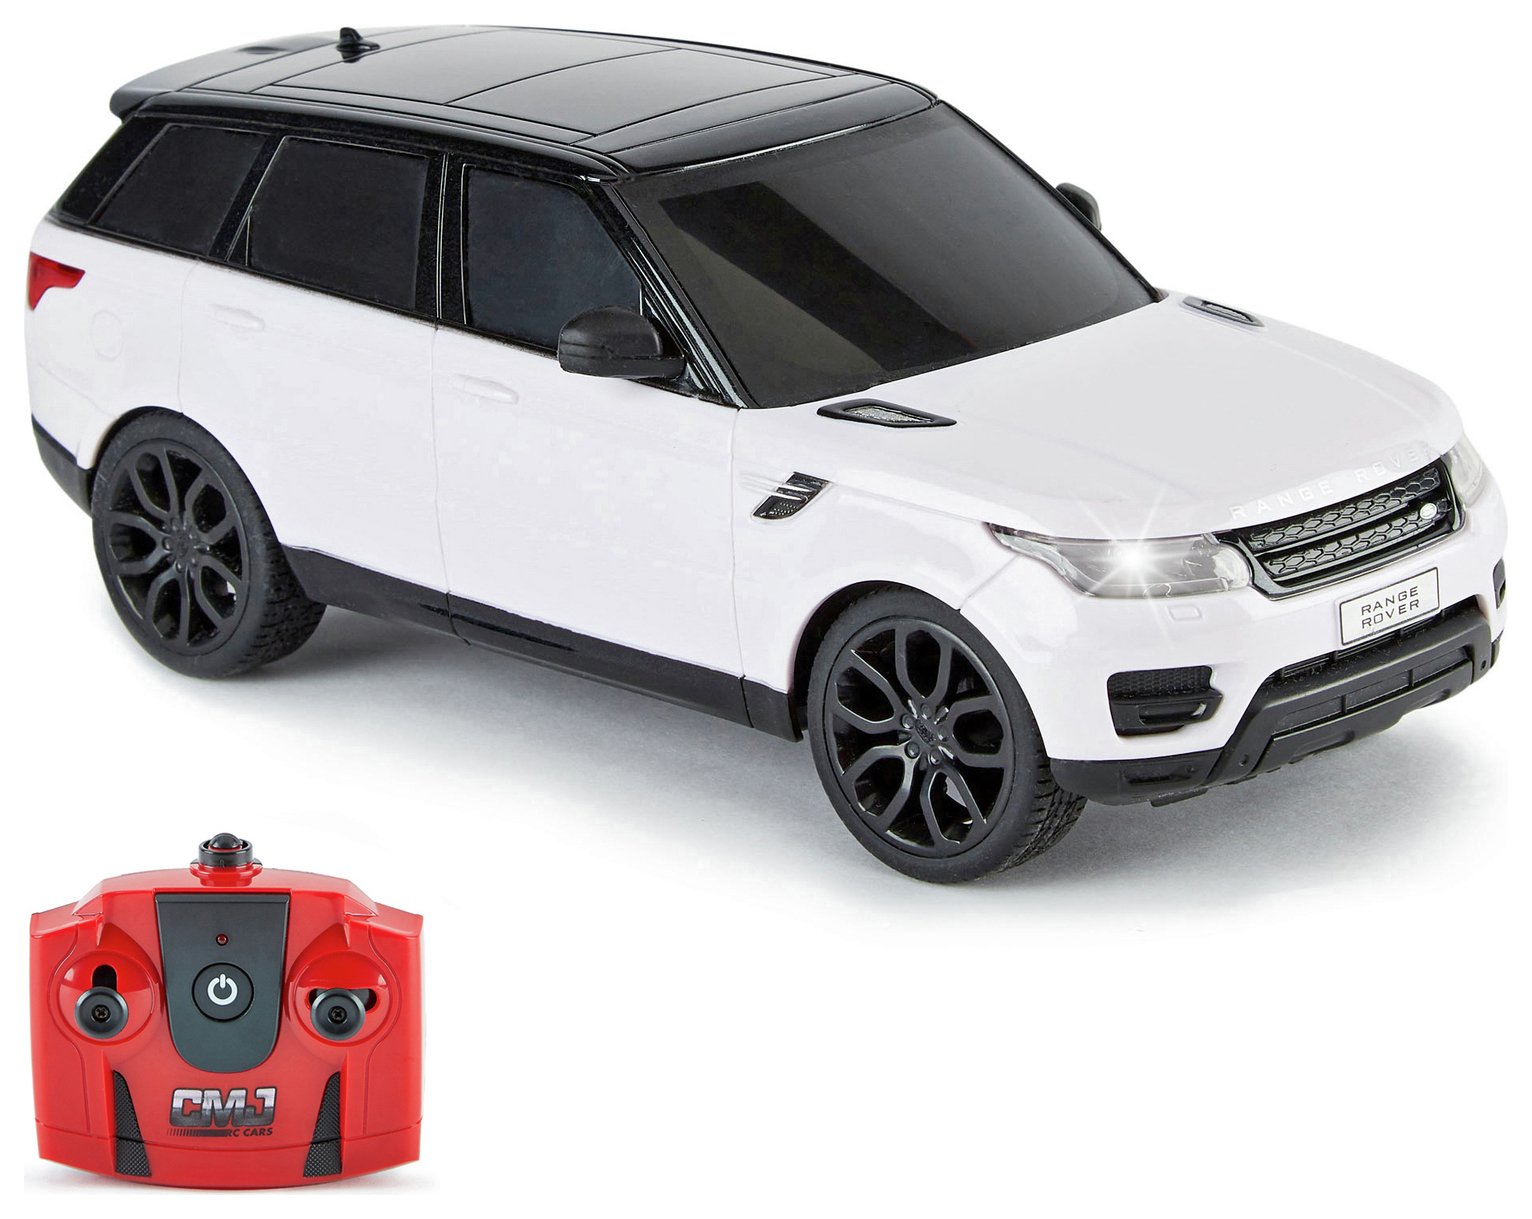 range rover toy car argos